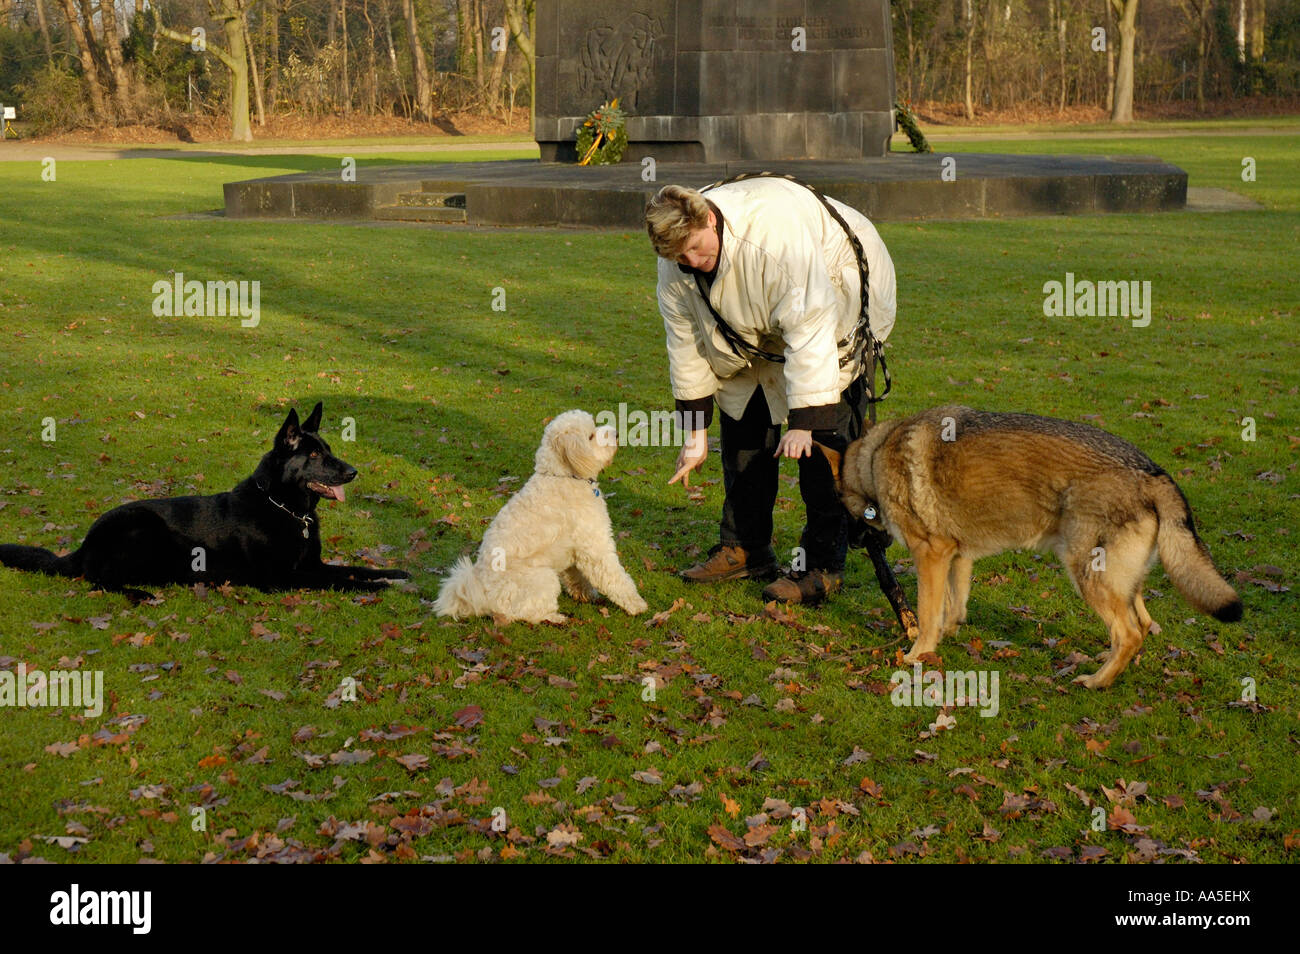 Dog training; Woman teaching 3 dogs Stock Photo